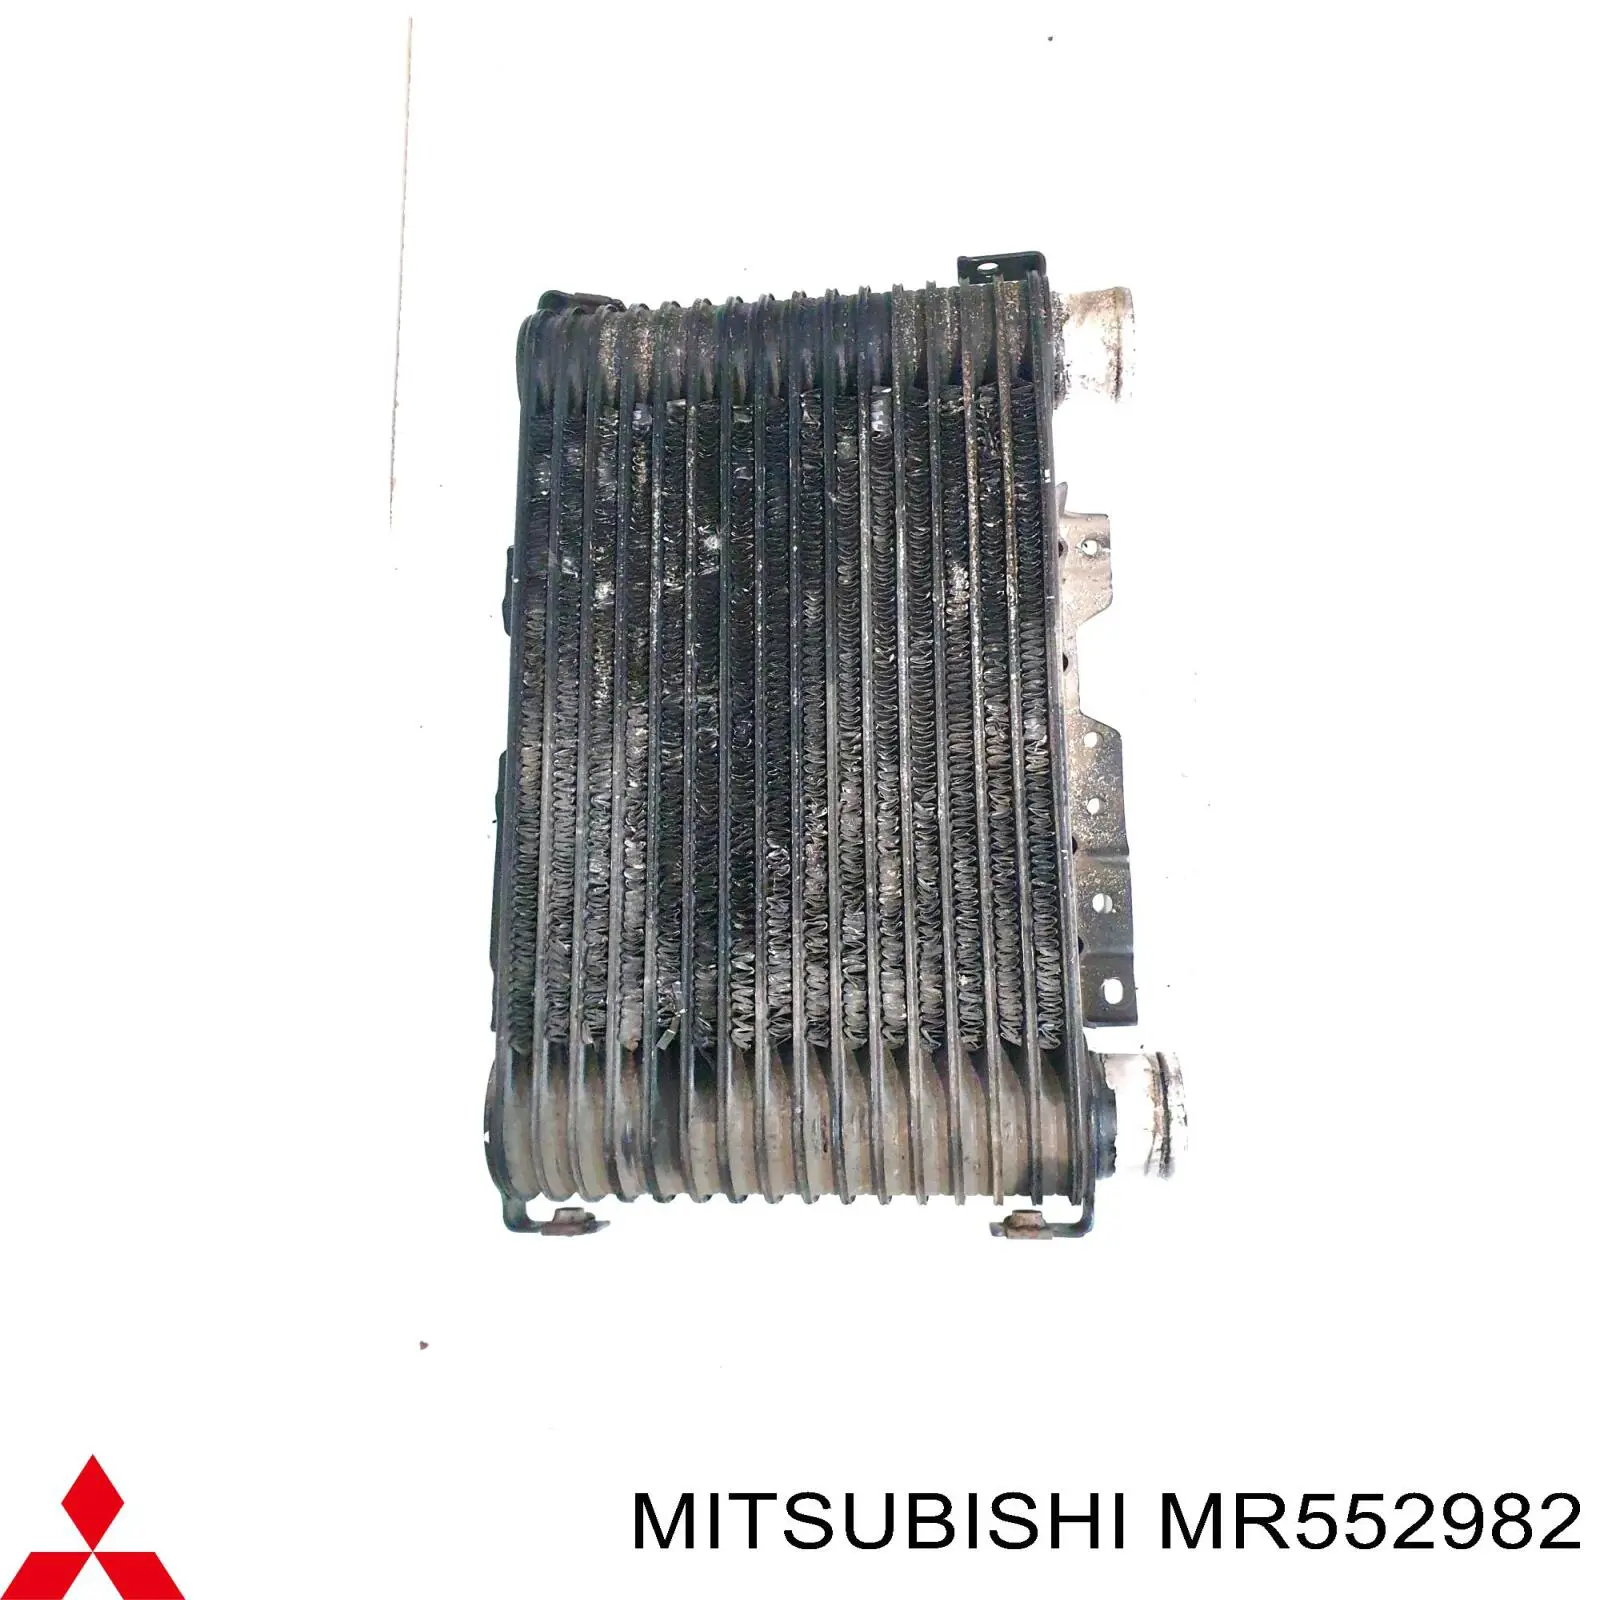 MR552982 Mitsubishi intercooler